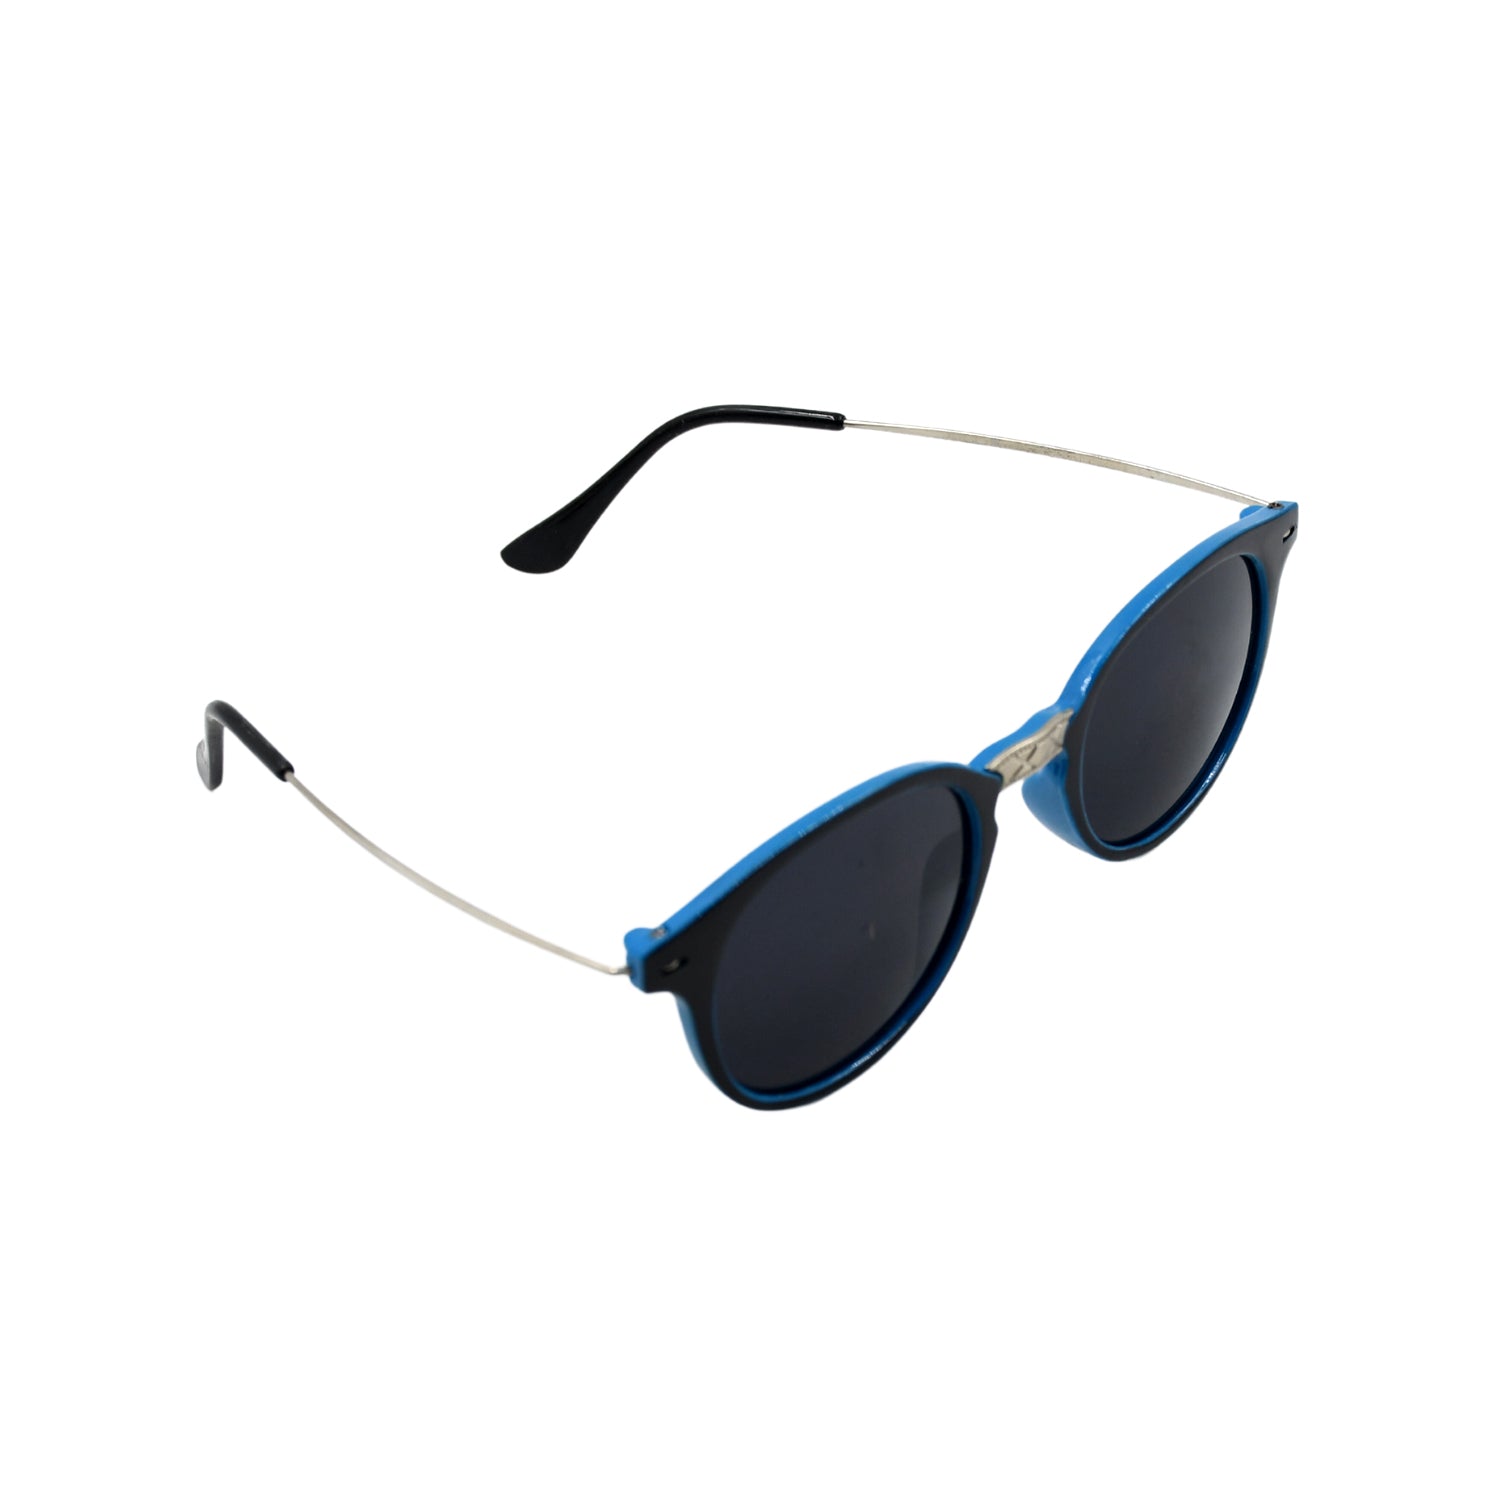 UV Protected Round Sunglasses, classic Sunglasses for Men & Women, Lightweight